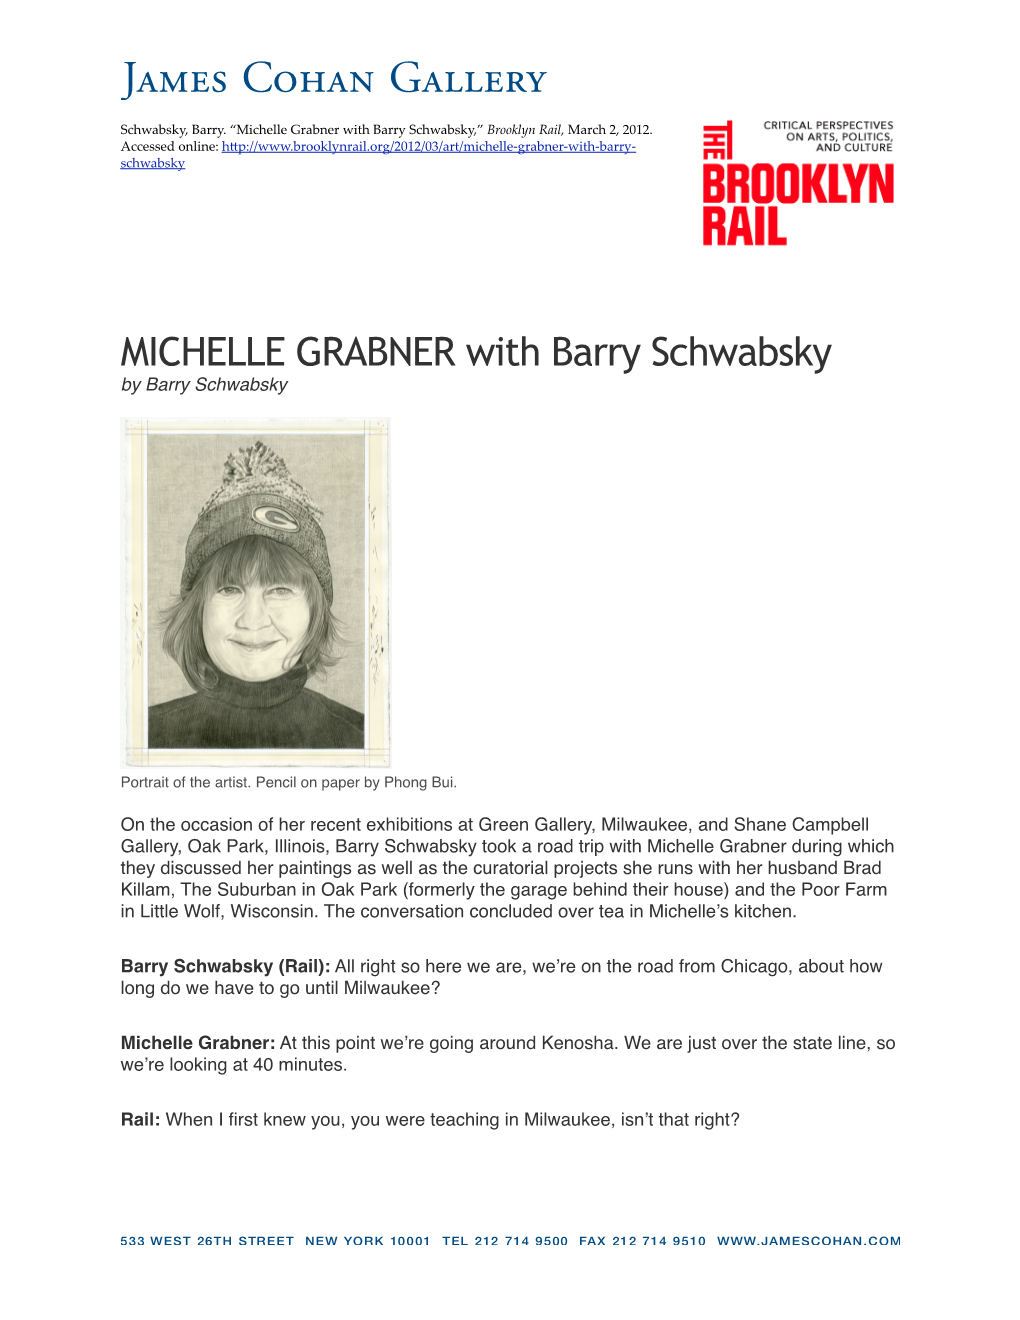 Michelle Grabner with Barry Schwabsky,” Brooklyn Rail, March 2, 2012